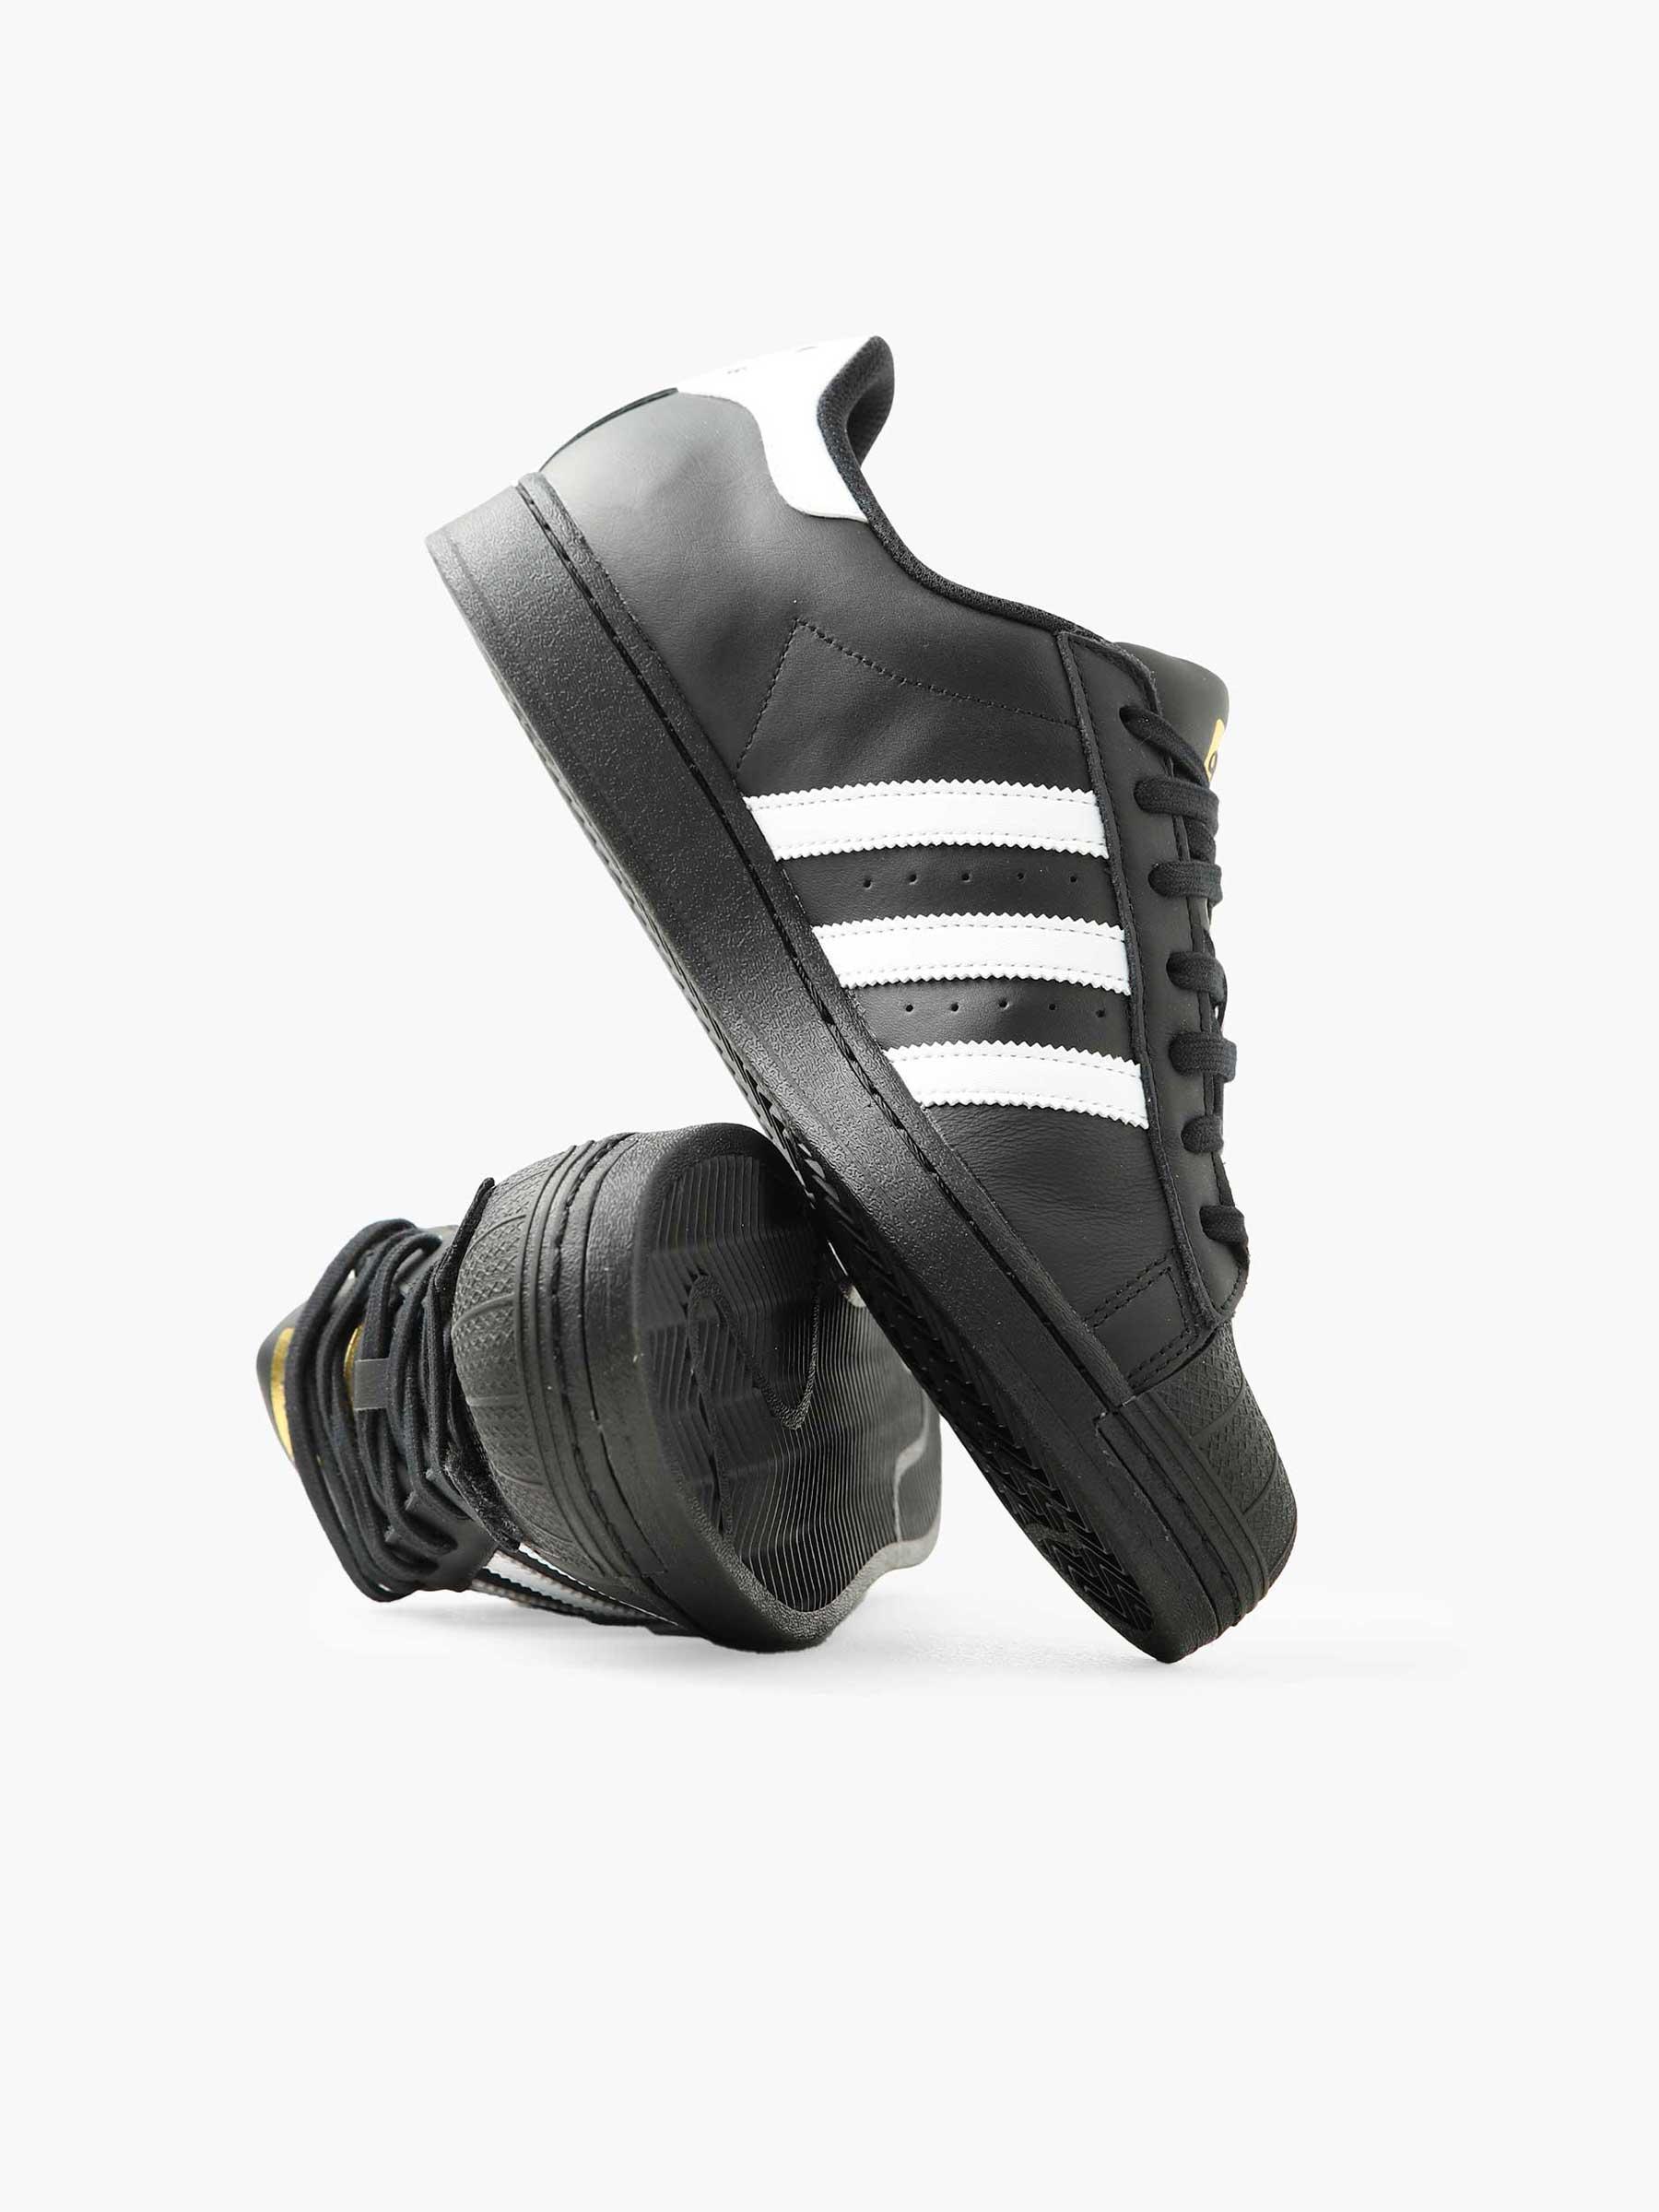 Adidas Superstar Core Black/Footwear White - EG4959